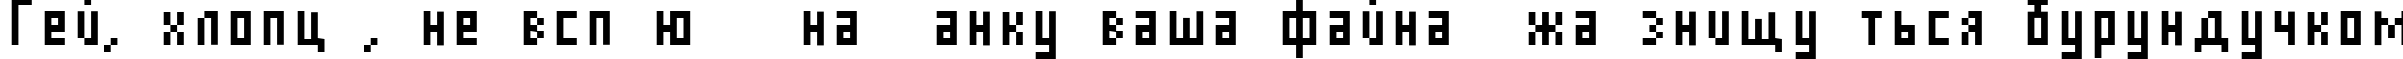 Пример написания шрифтом AuX DotBitC Compressed текста на украинском